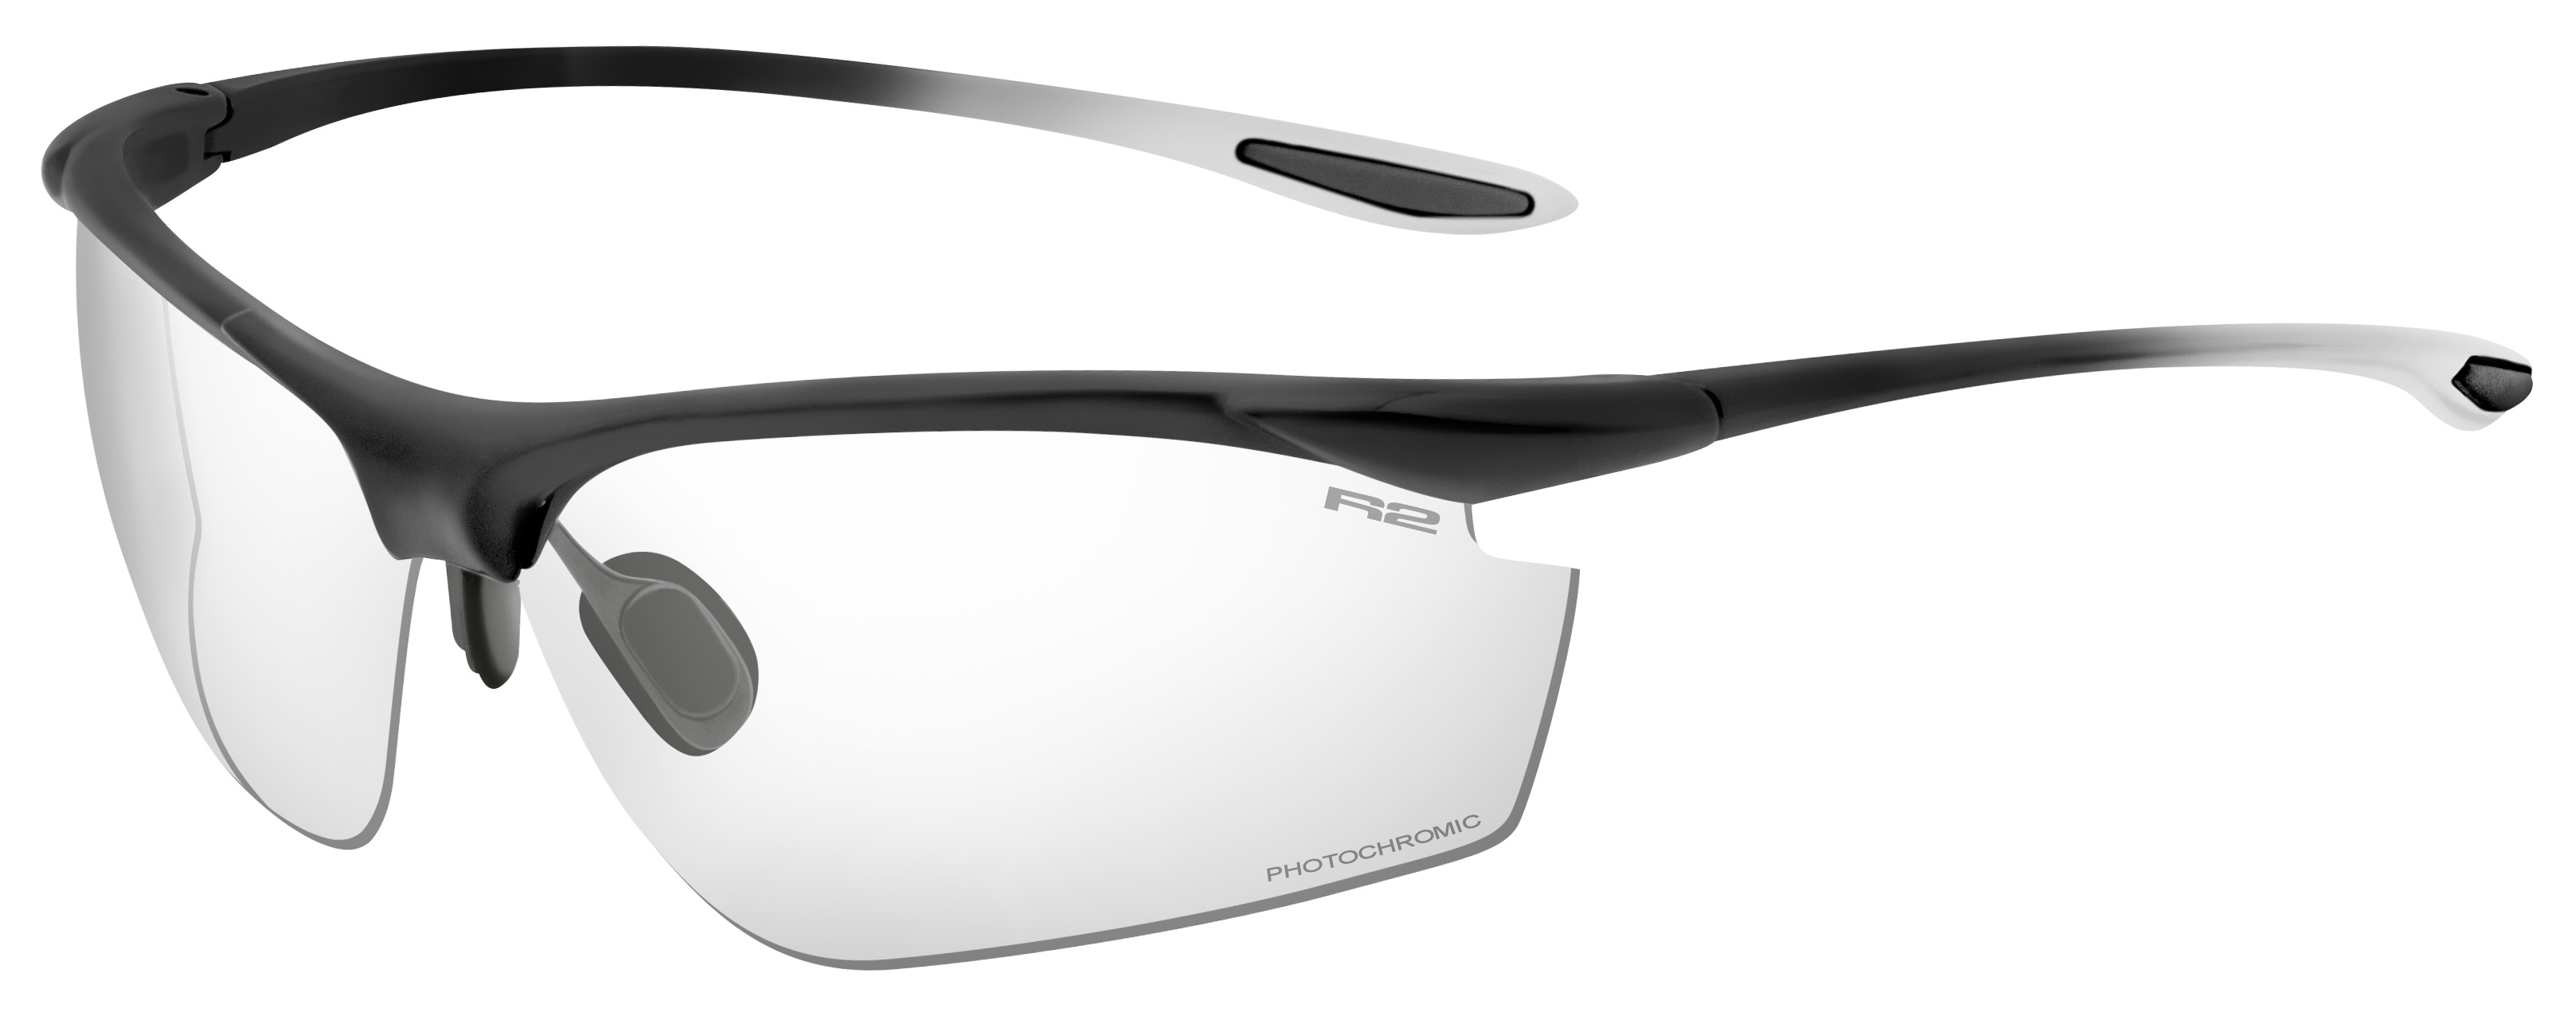 Photochromatic sunglasses R2 PEAK AT031R standard